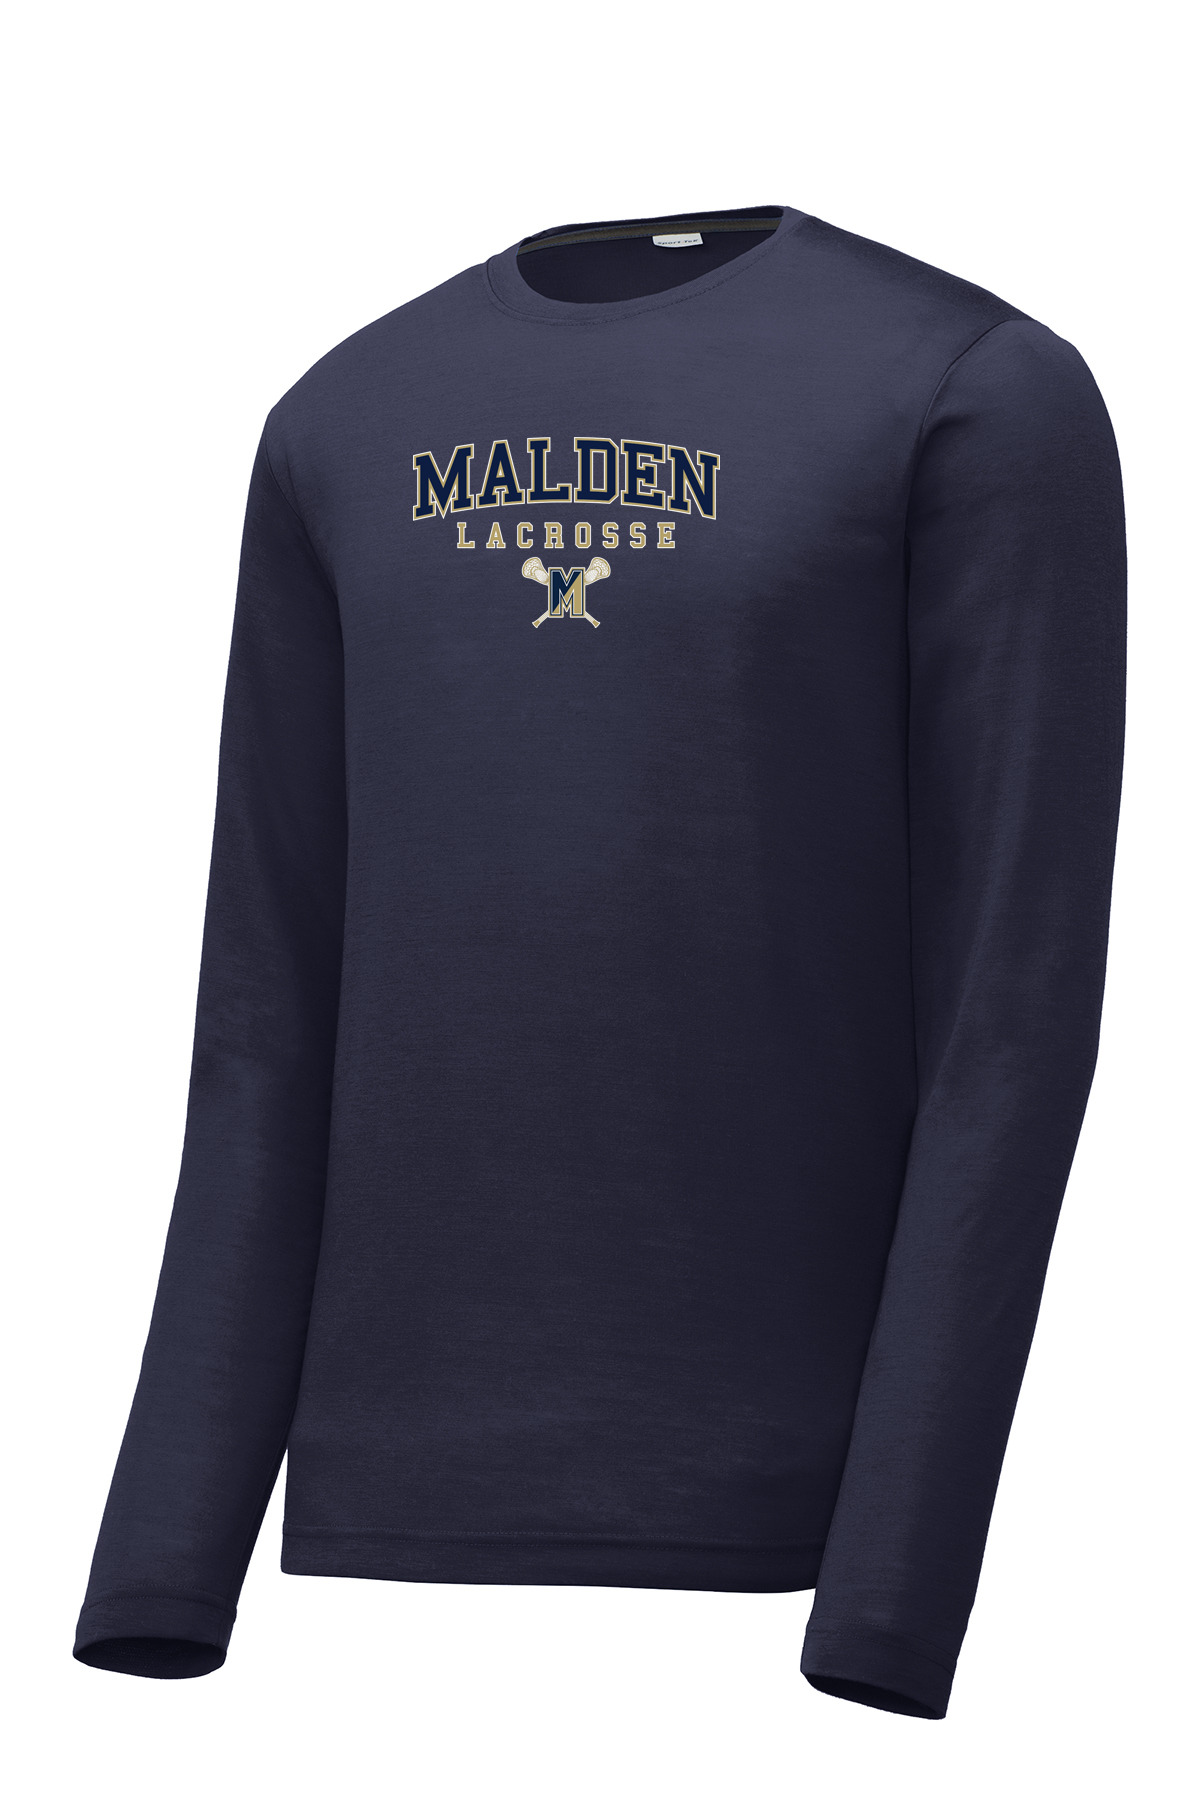 Malden Lacrosse Long Sleeve CottonTouch Performance Shirt